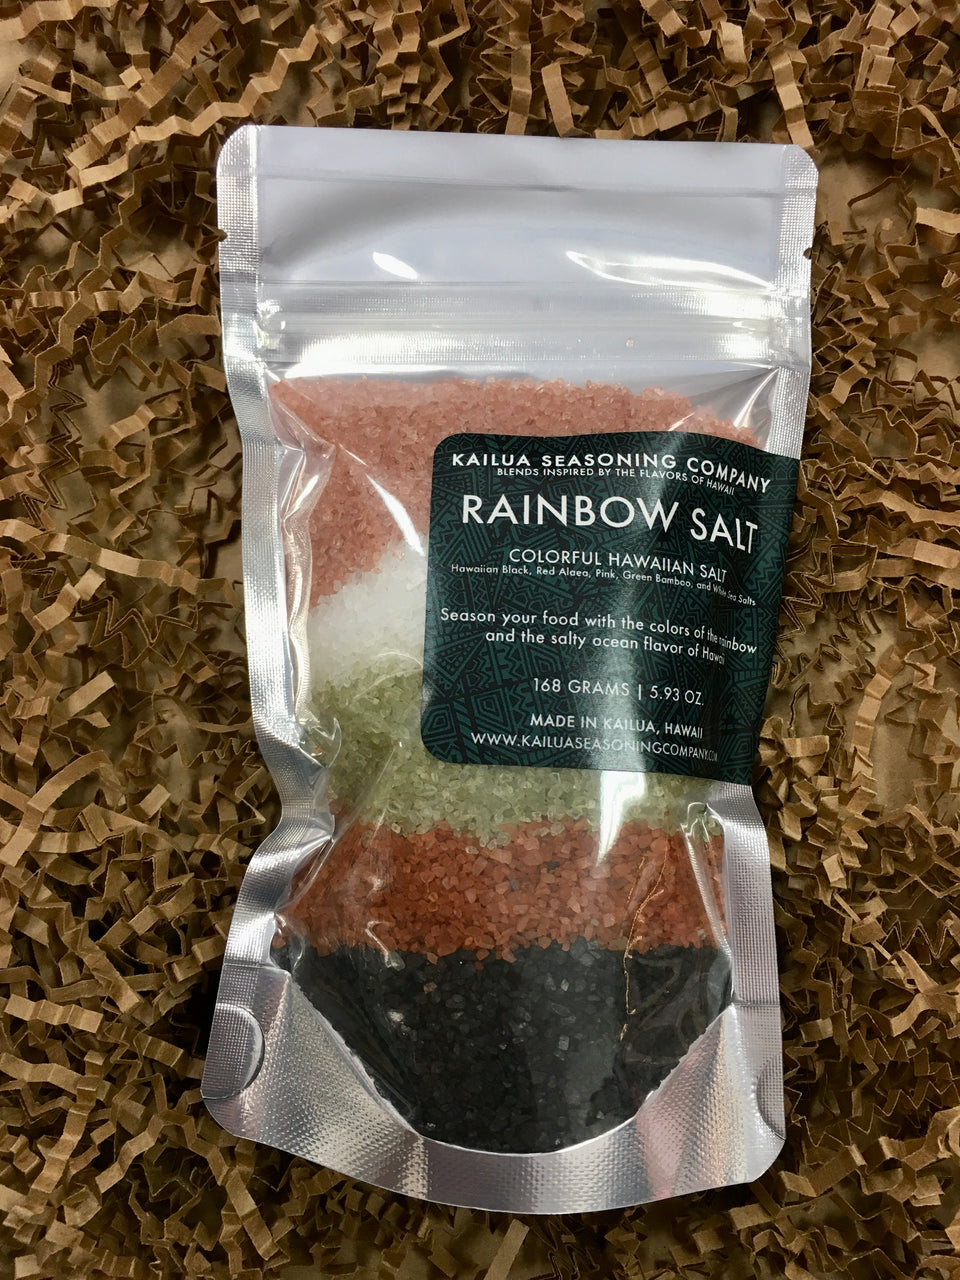 close up of rainbow salt package